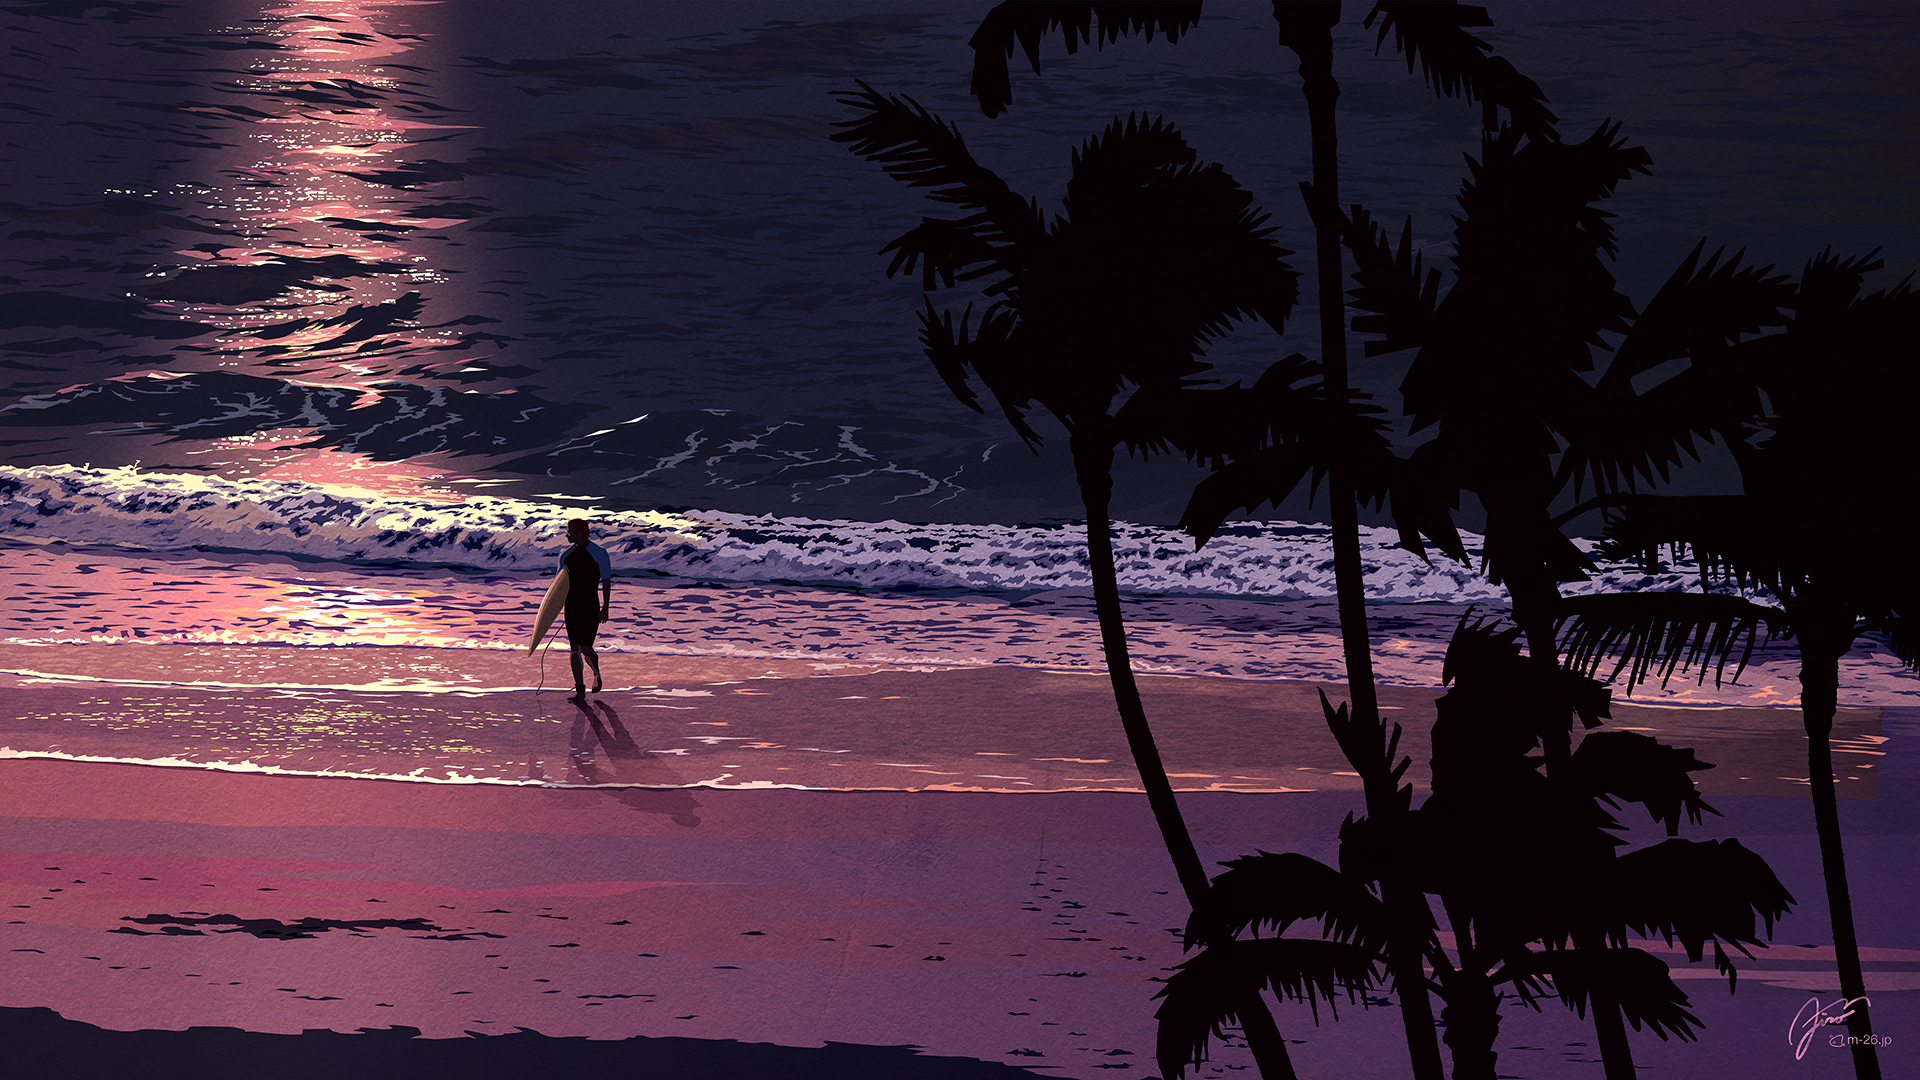 General 1920x1080 m26 digital art artwork illustration digital painting landscape nature sea water beach palm trees surfers watermarked sunset